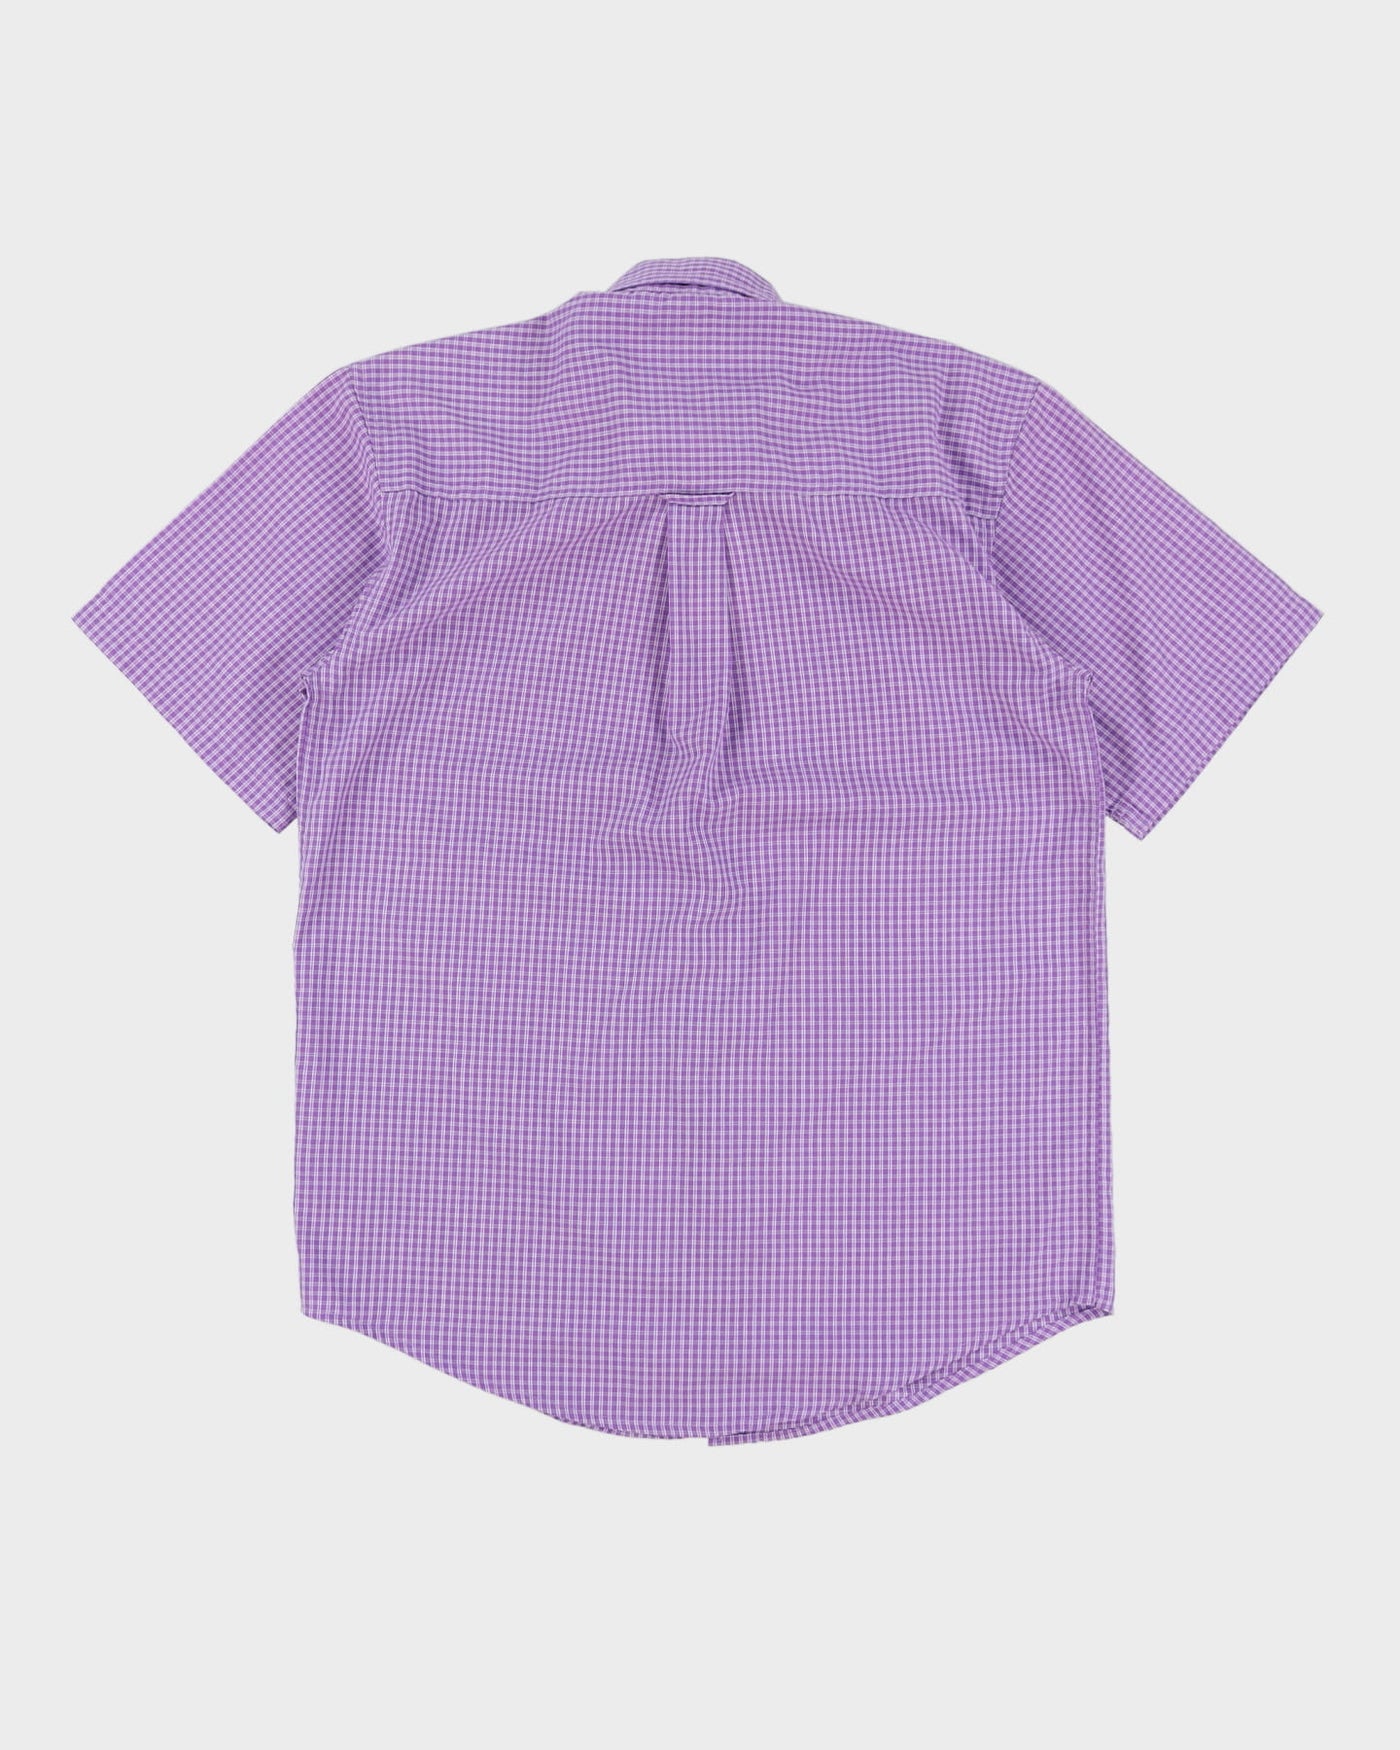 Vintage 90s Wrangler Purple Check Patterned Short-Sleeve Oversized Shirt - S